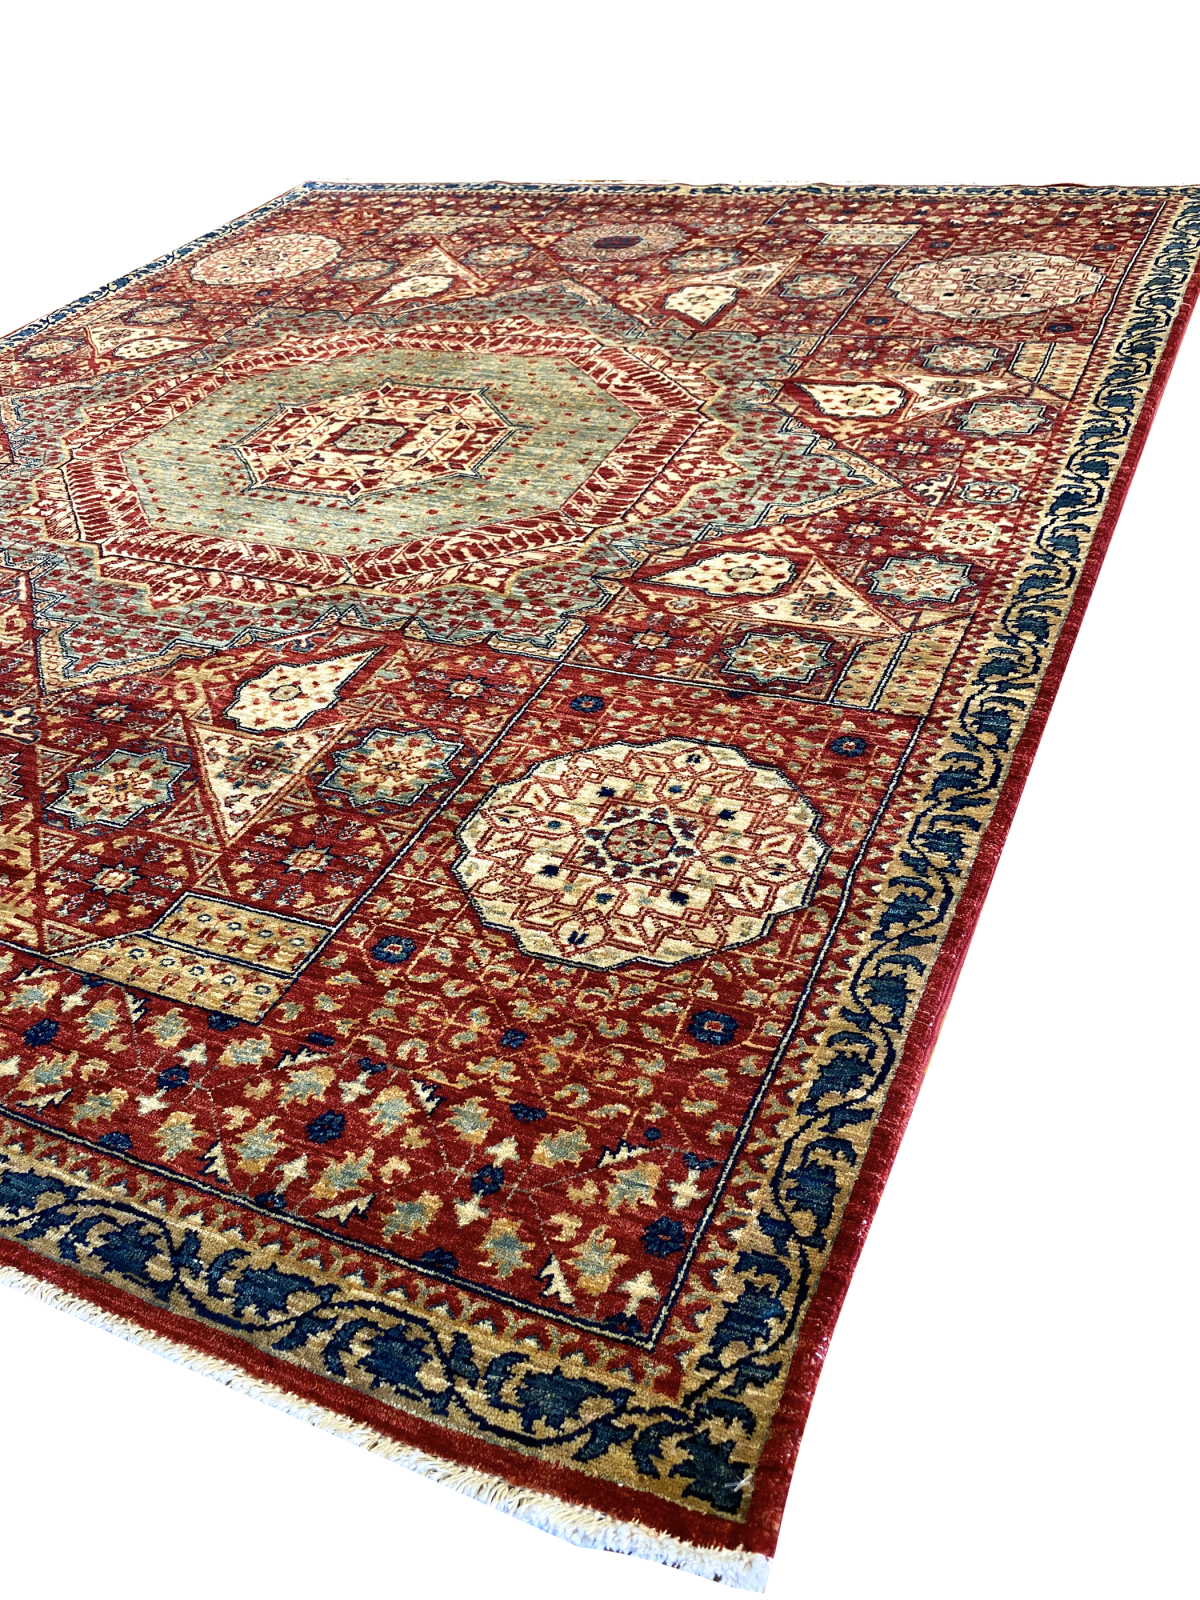 Mamluk 5' 5" x 6' 5" Handmade Area Rug - Shabahang Royal Carpet